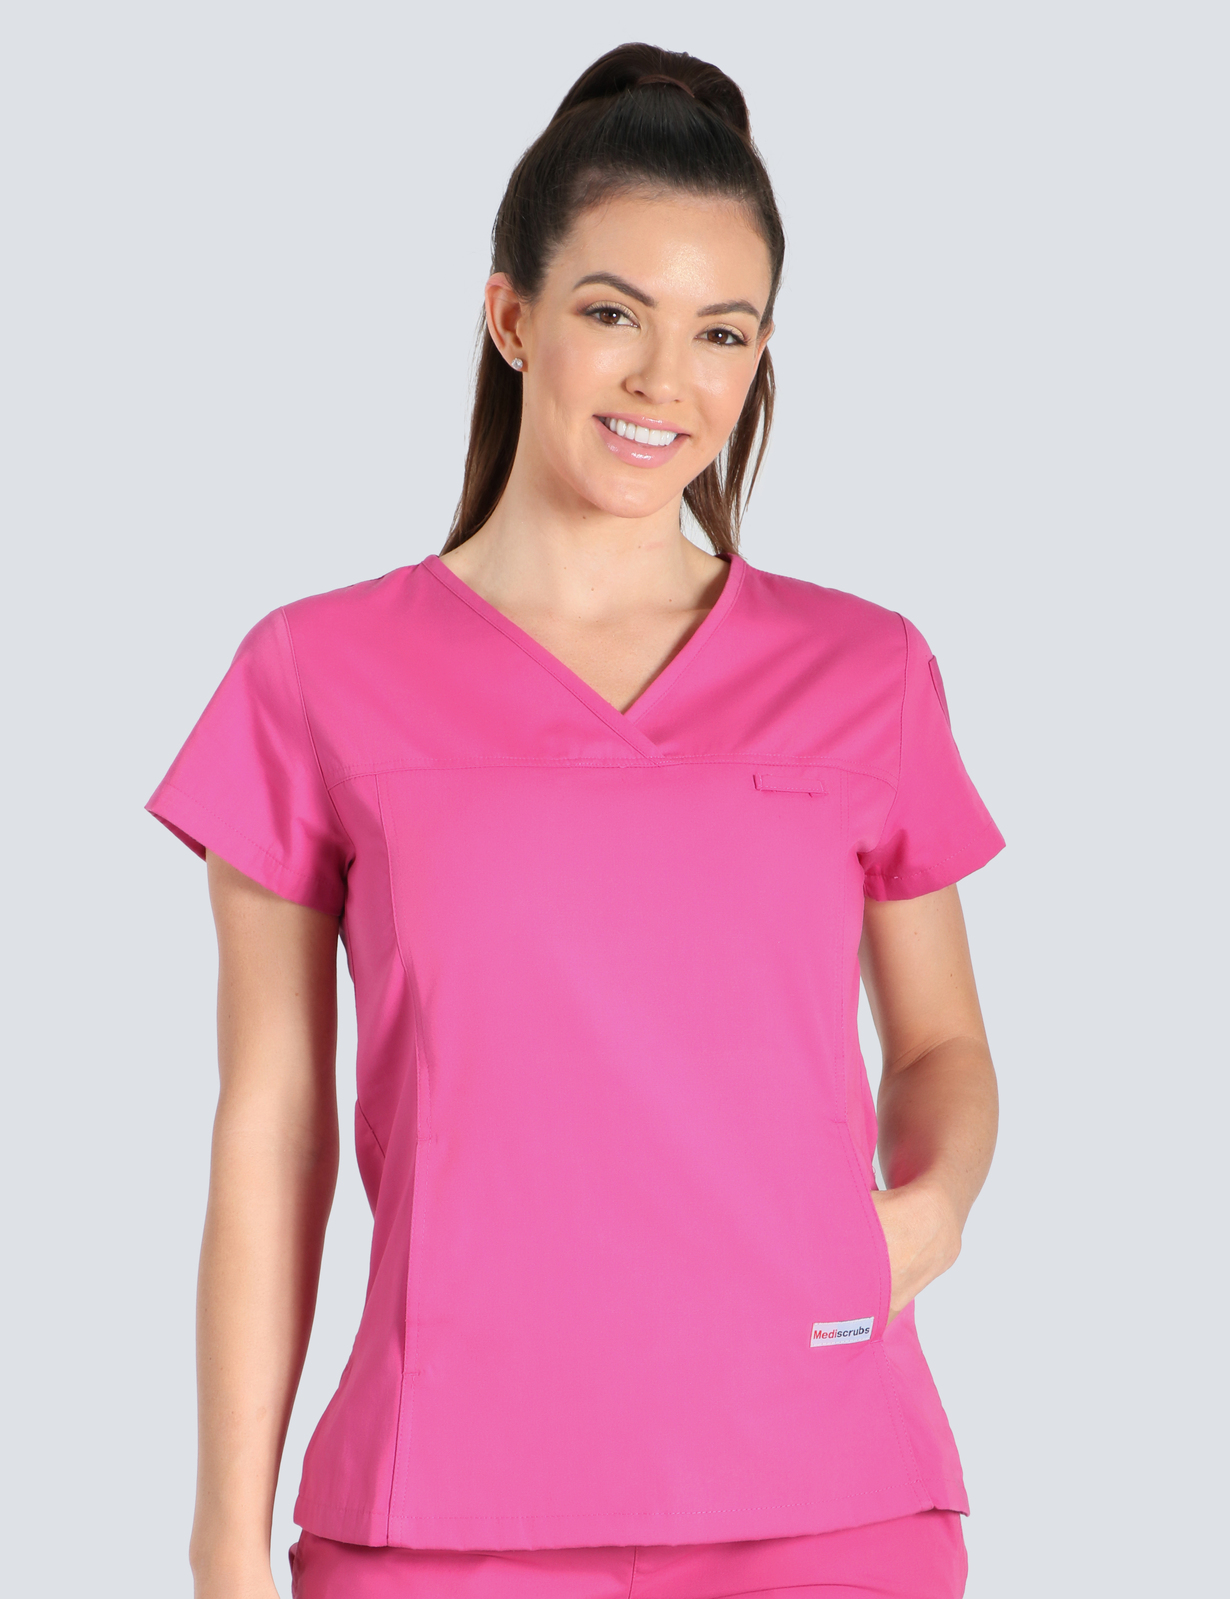 Queensland Children's Hospital Emergency Department Nurse Unit Manager Uniform Top Bundle  (Women's Fit Top in Pink incl Logos)